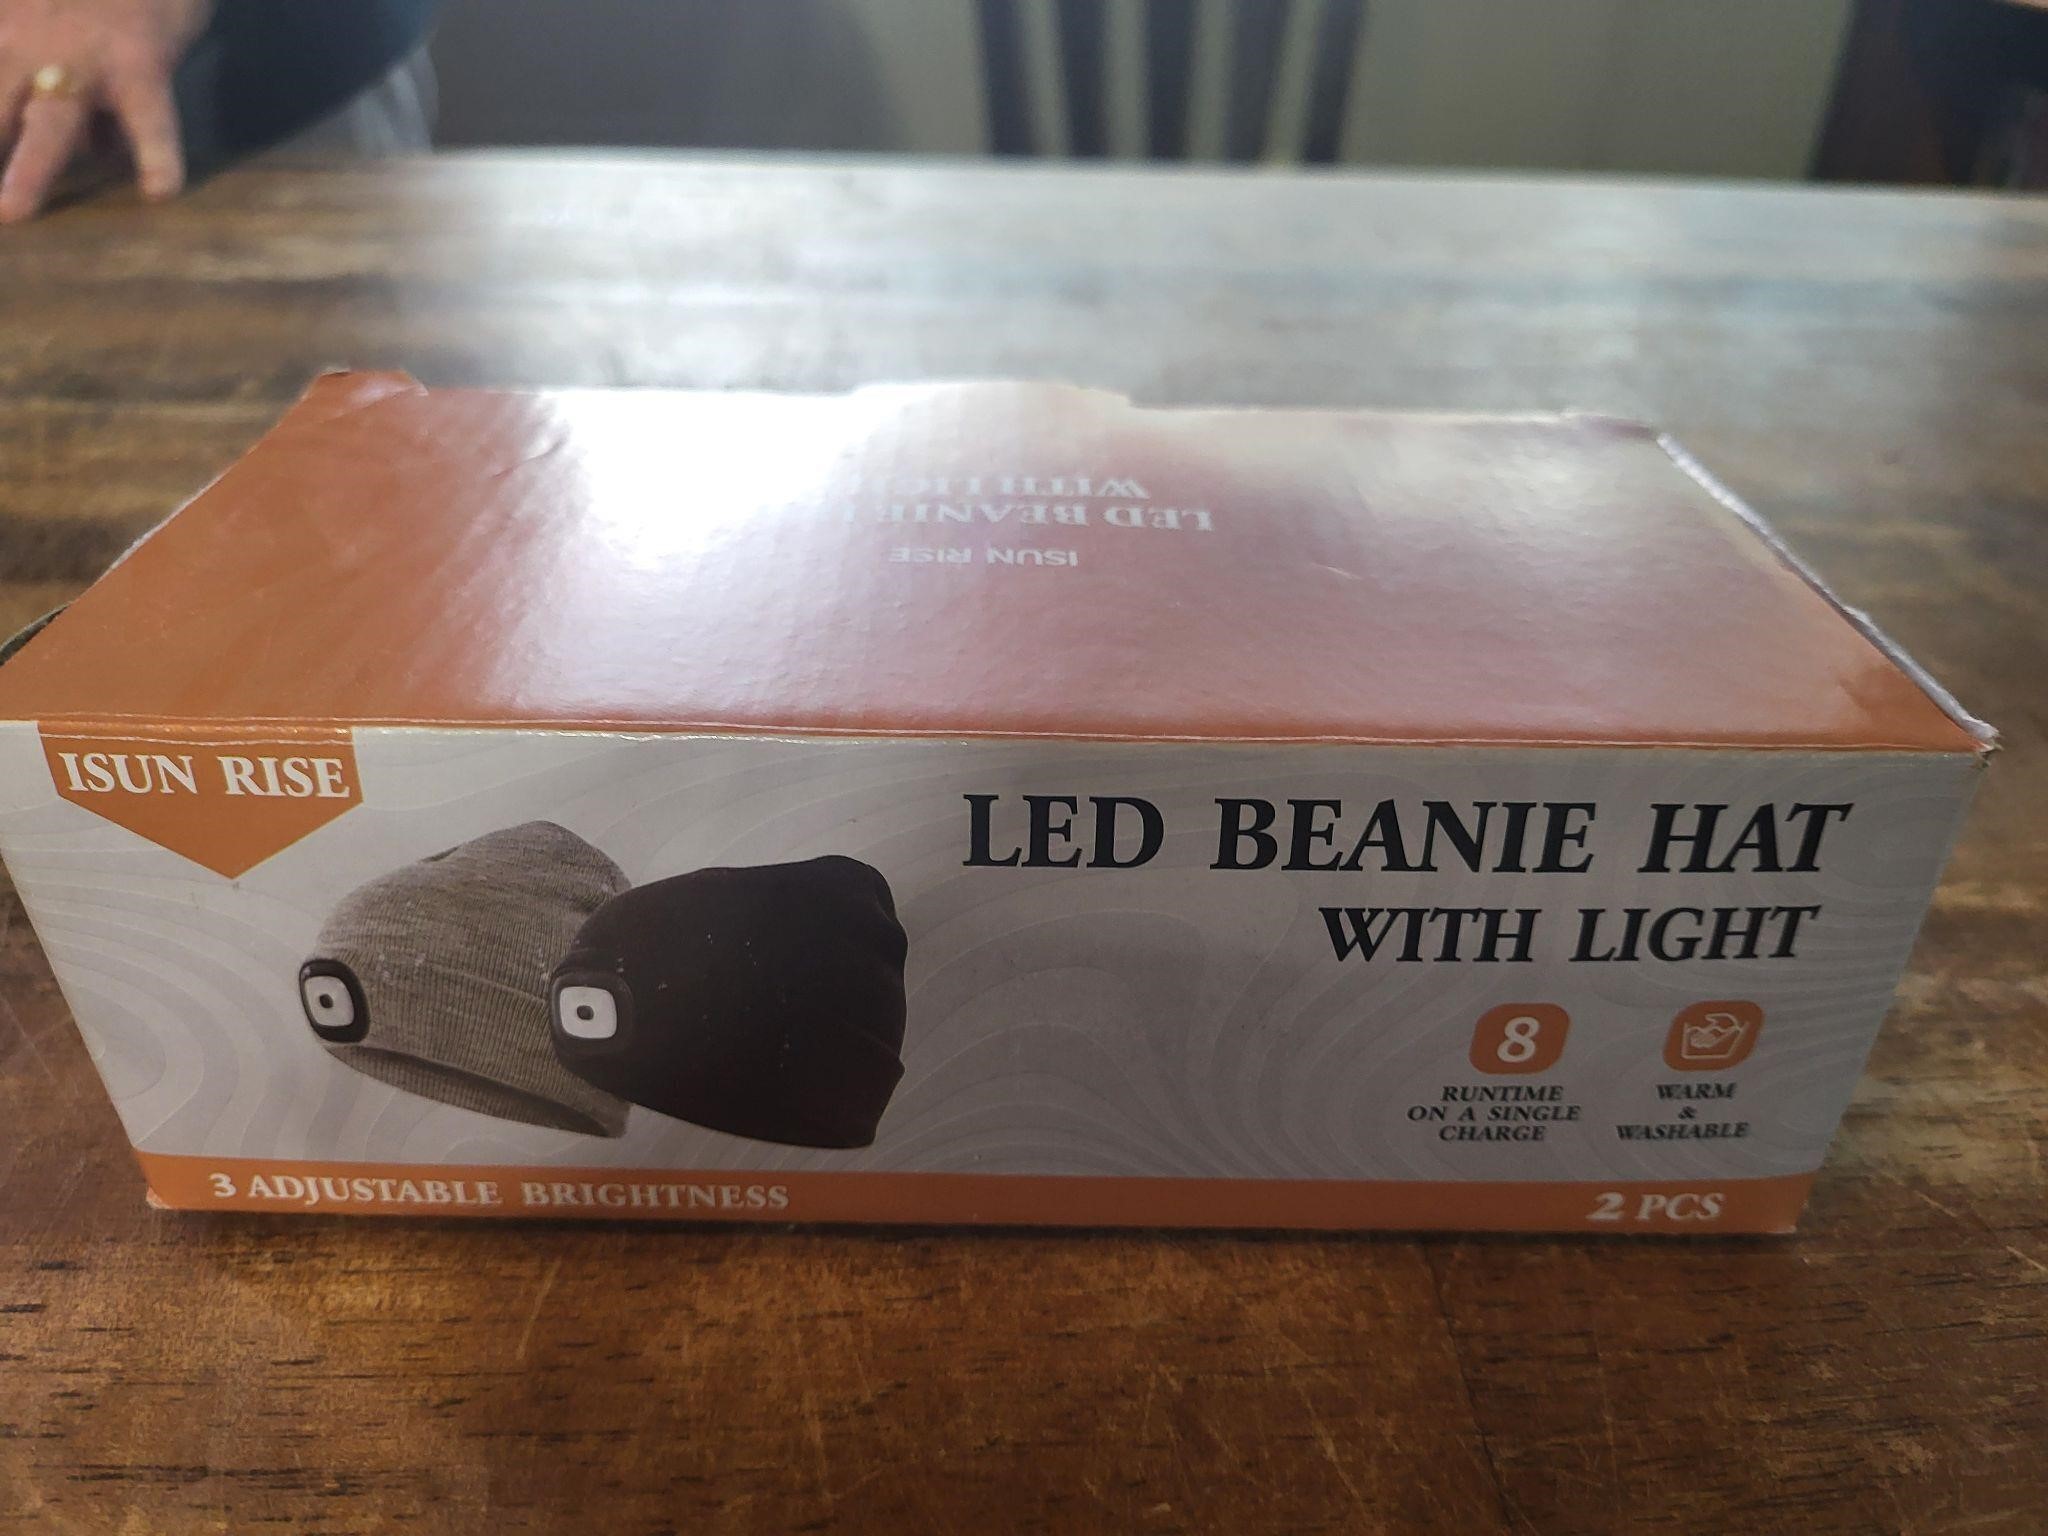 LED Beanie hats